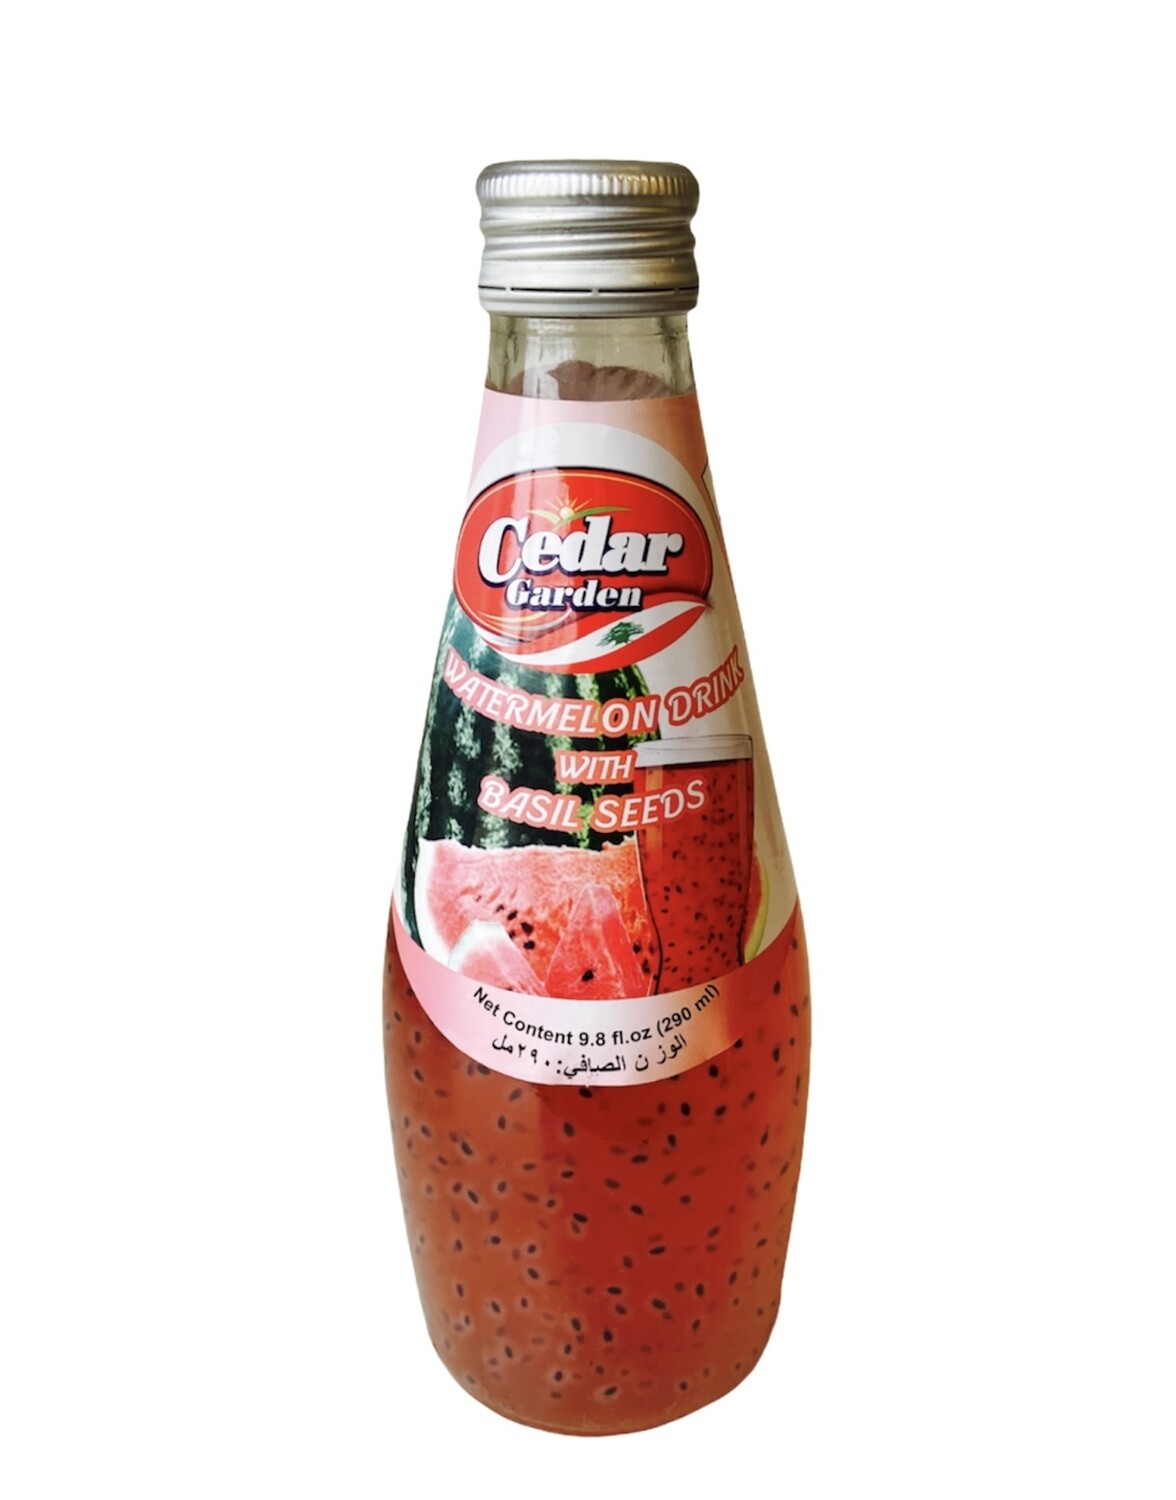 Cedar Garden Watermelon Drink With Basil Seeds 24x290ml